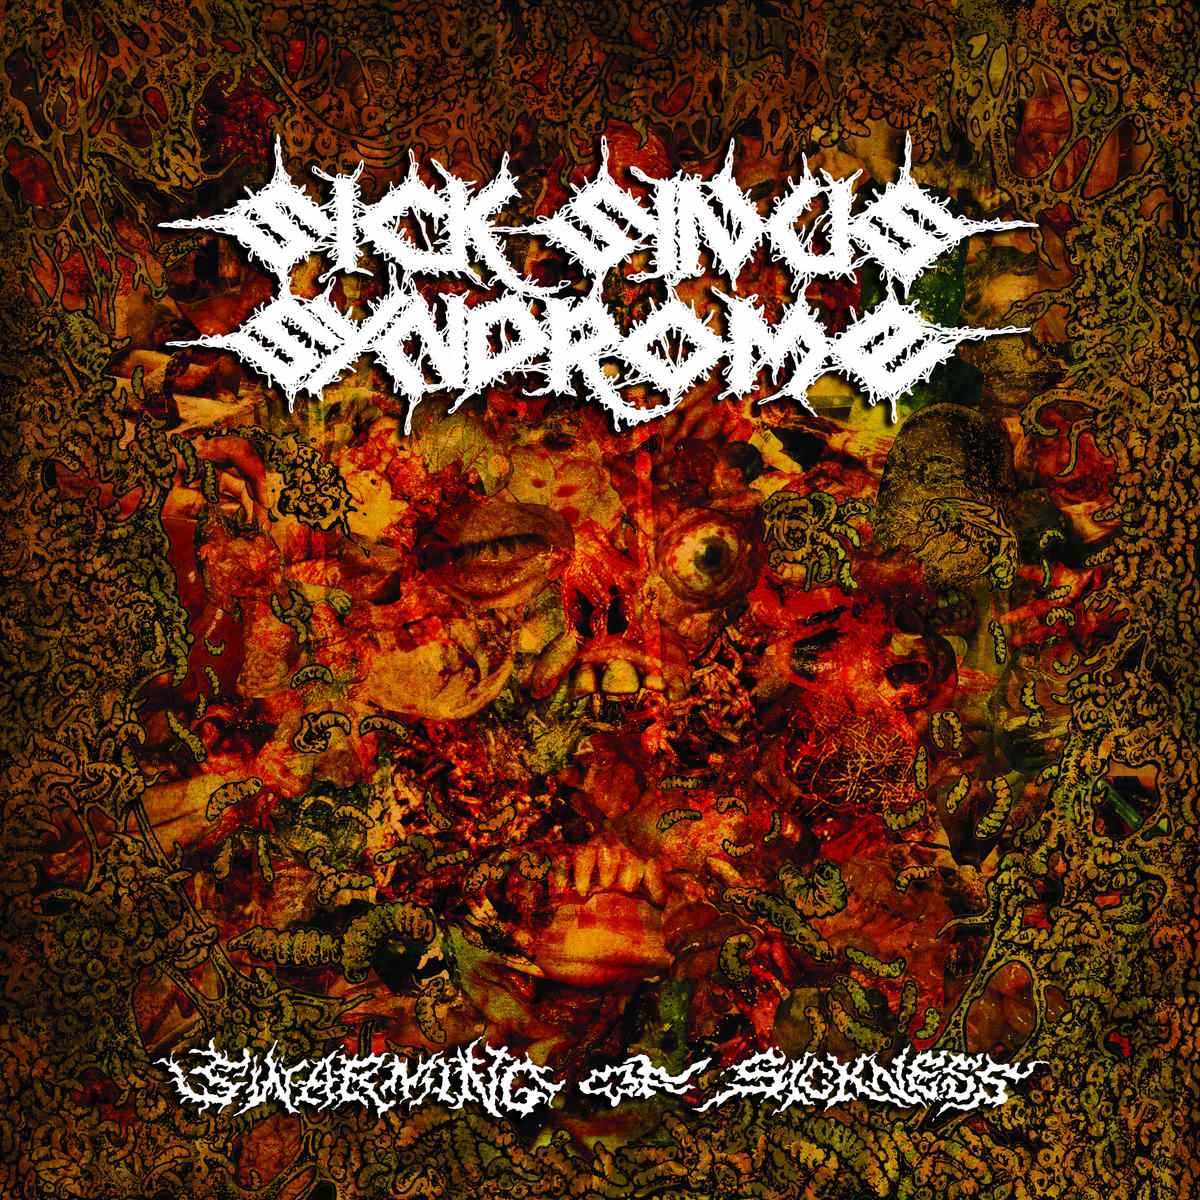 Sick Sinus Syndrome - Swarming of Sickness